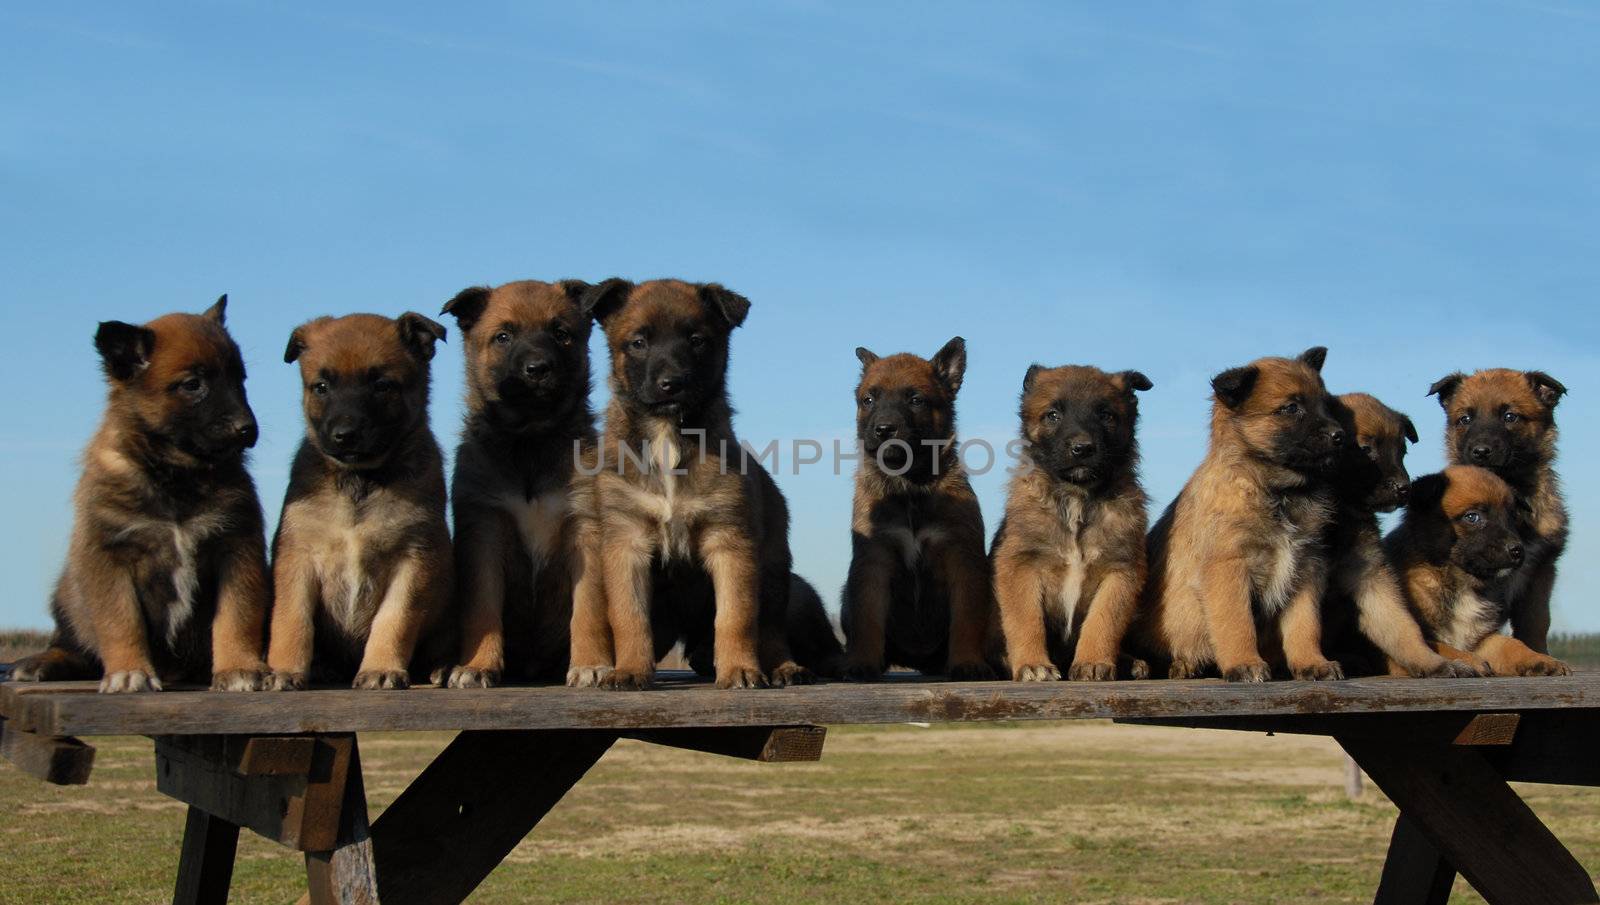 ten puppies purebred belgian shepherds malinois on a table